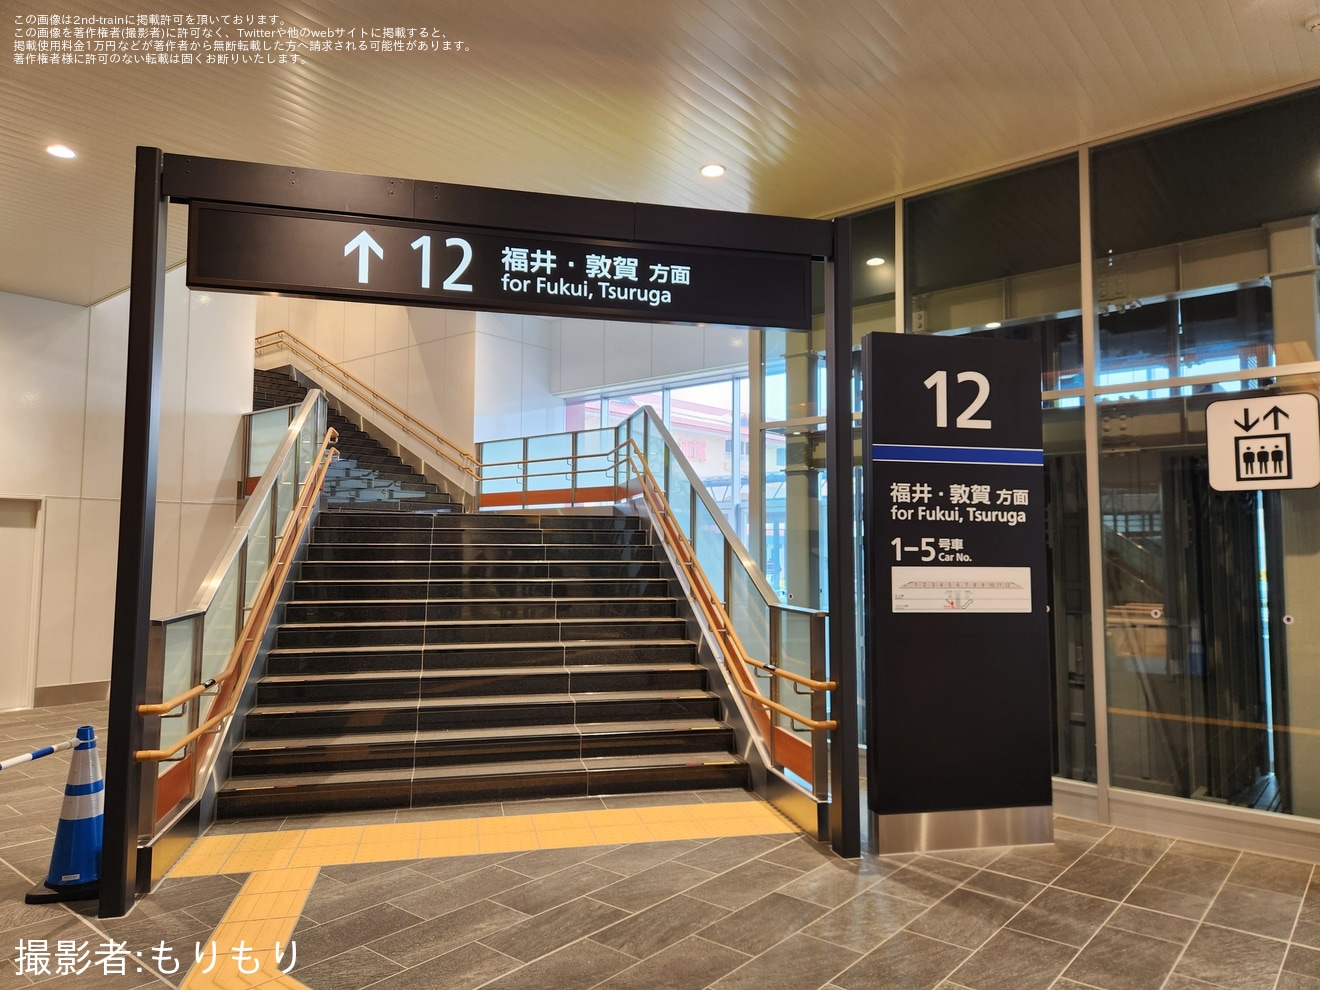 【JR西】「北陸新幹線加賀温泉駅新駅舎見学会」開催の拡大写真